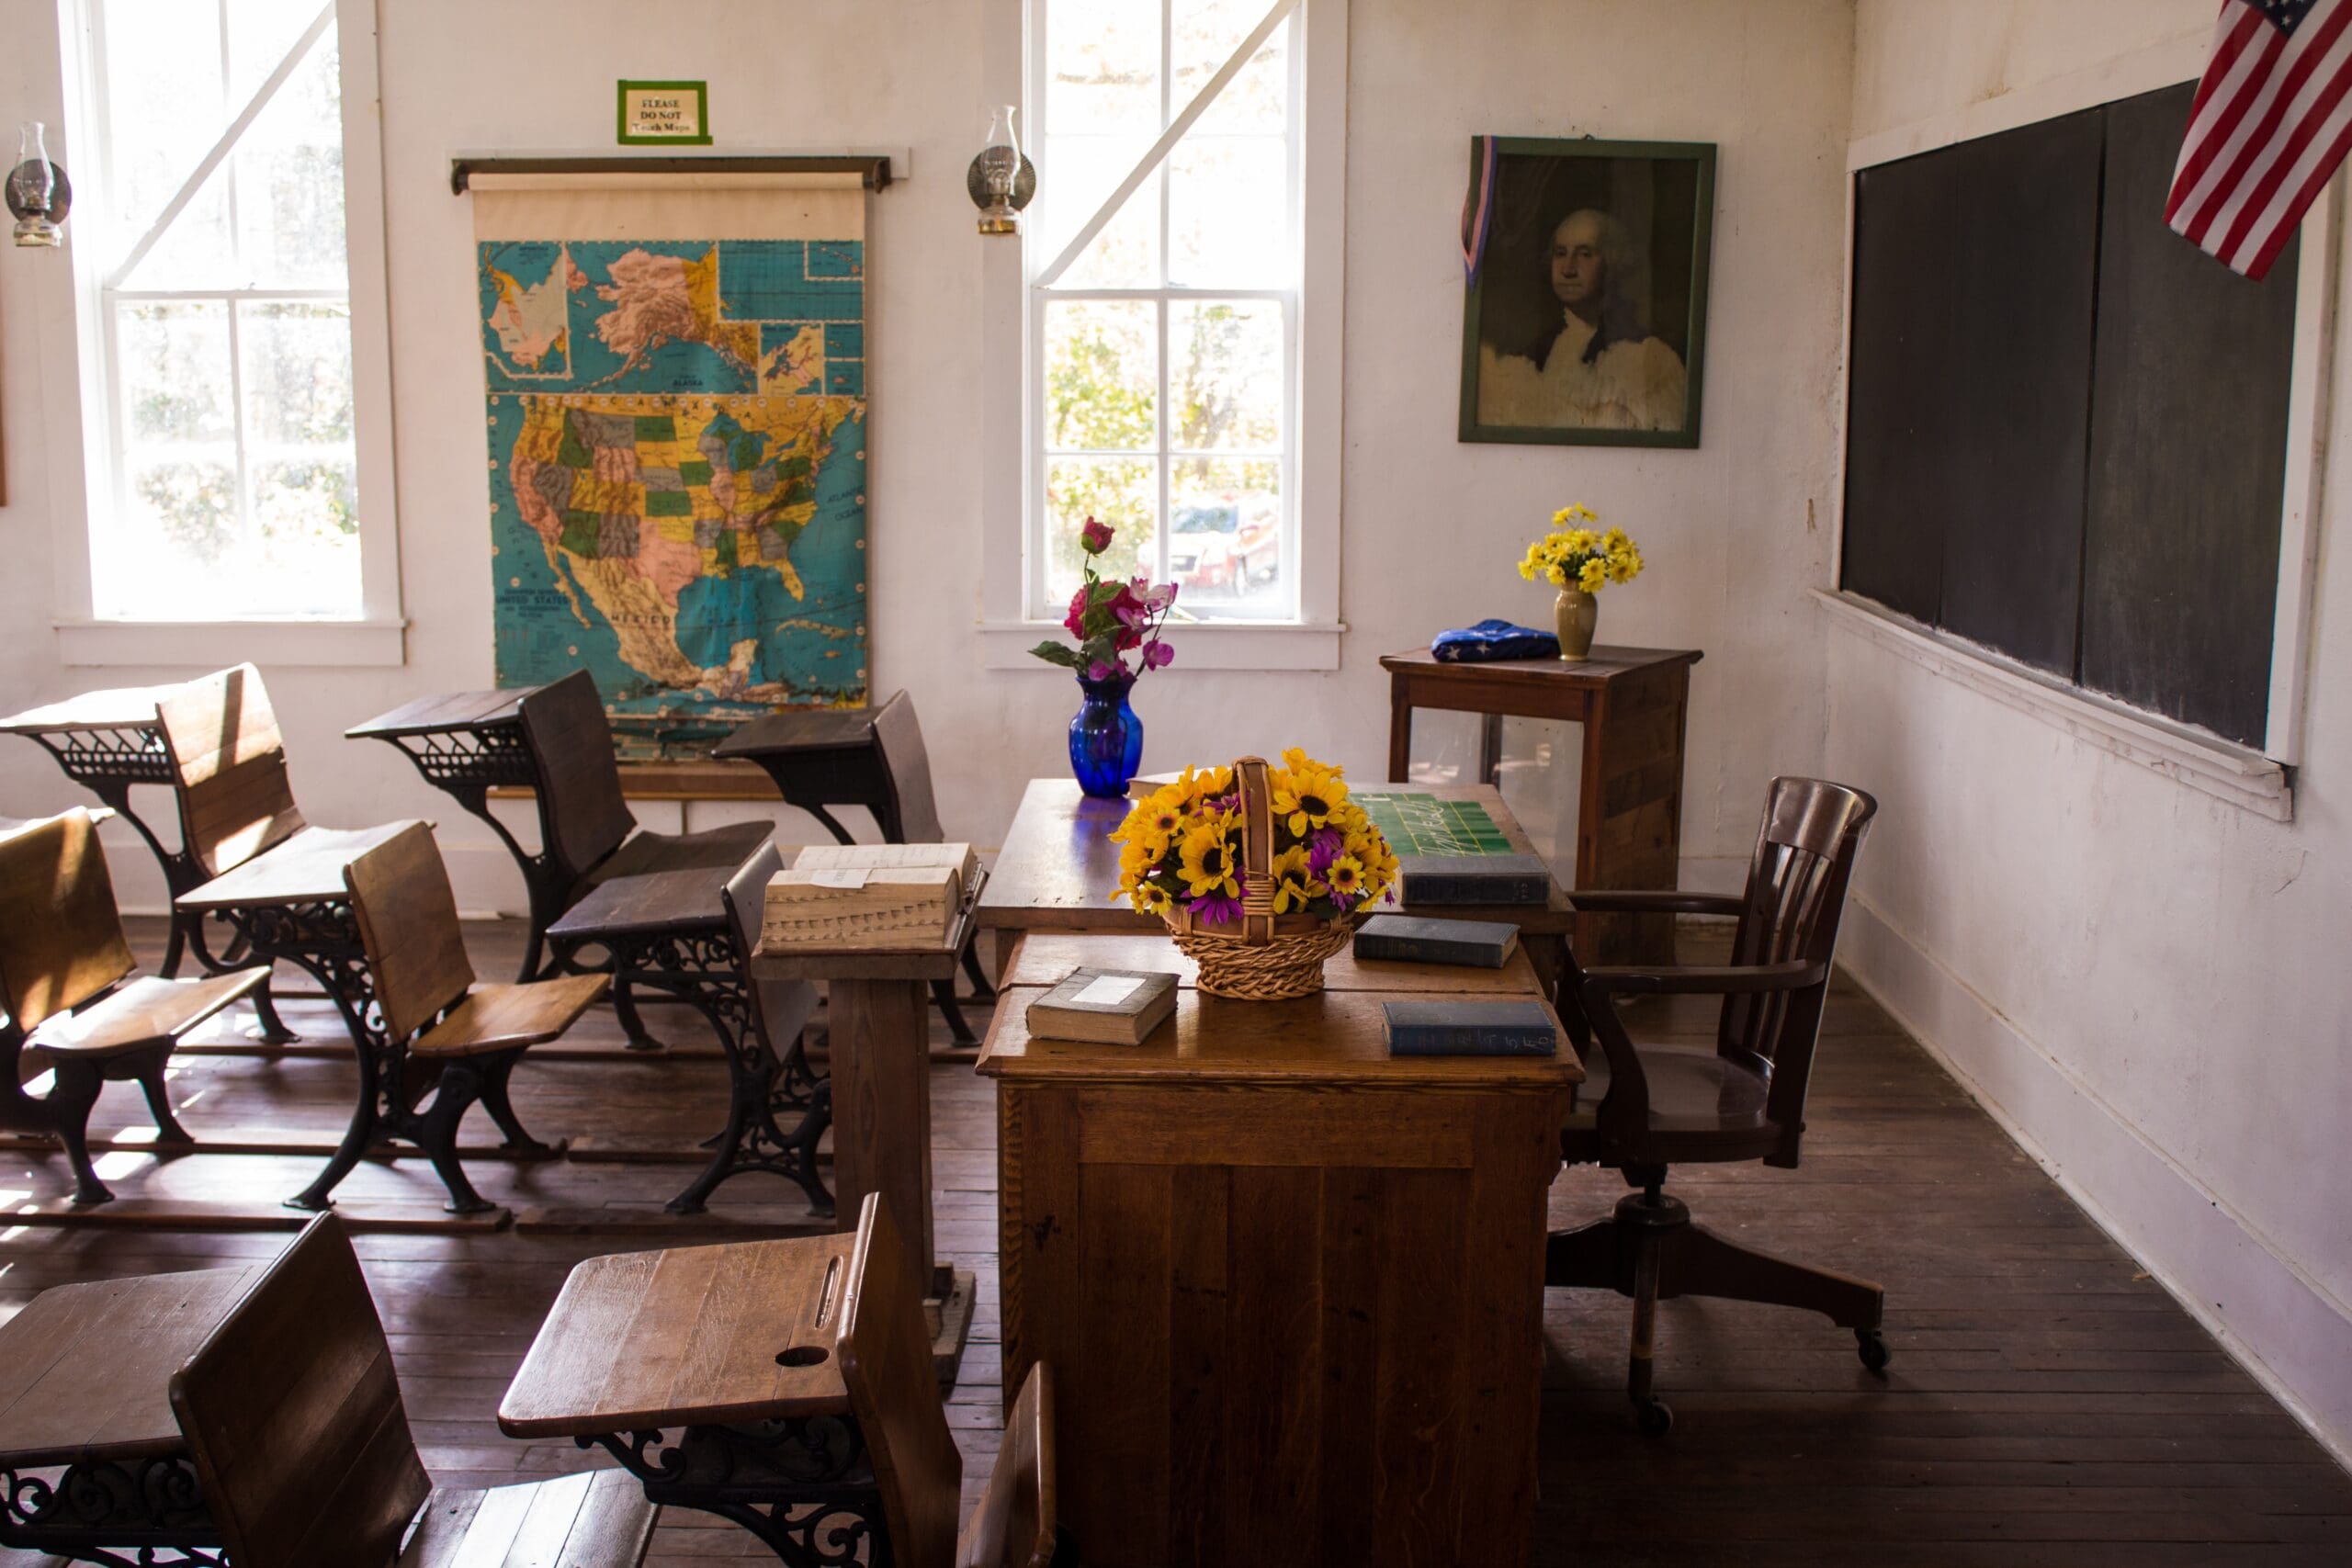 A classroom by Jeffrey hamilton for unsplash